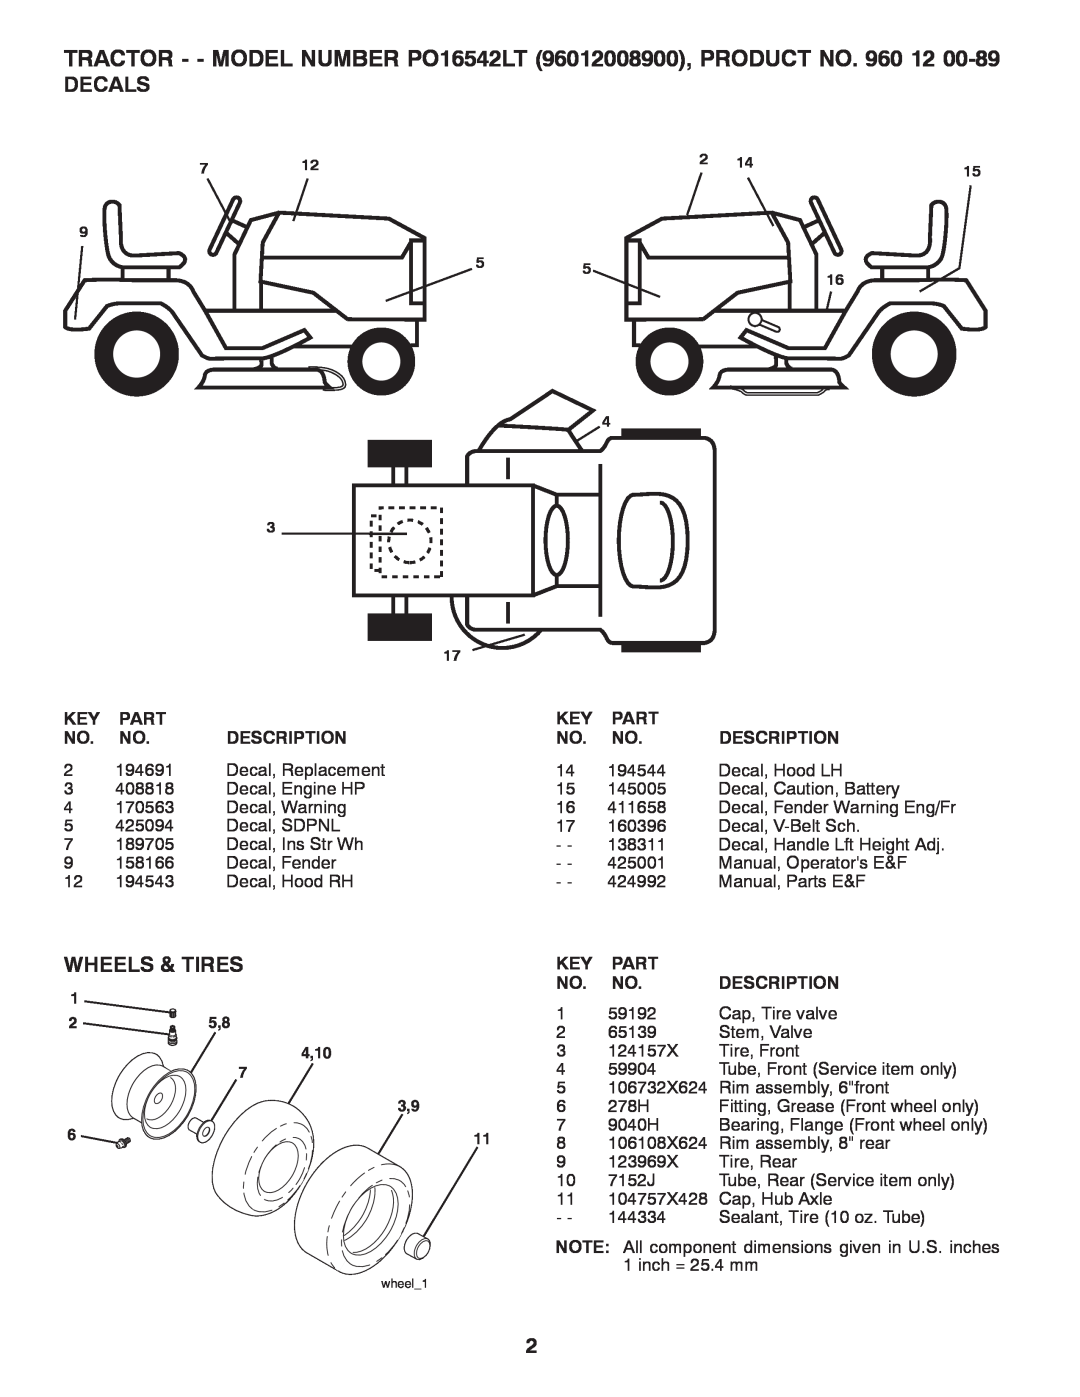 Poulan 960 12 00-89 TRACTOR - - MODEL NUMBER PO16542LT 96012008900, PRODUCT NO, Decals, Wheels & Tires, Part, Description 